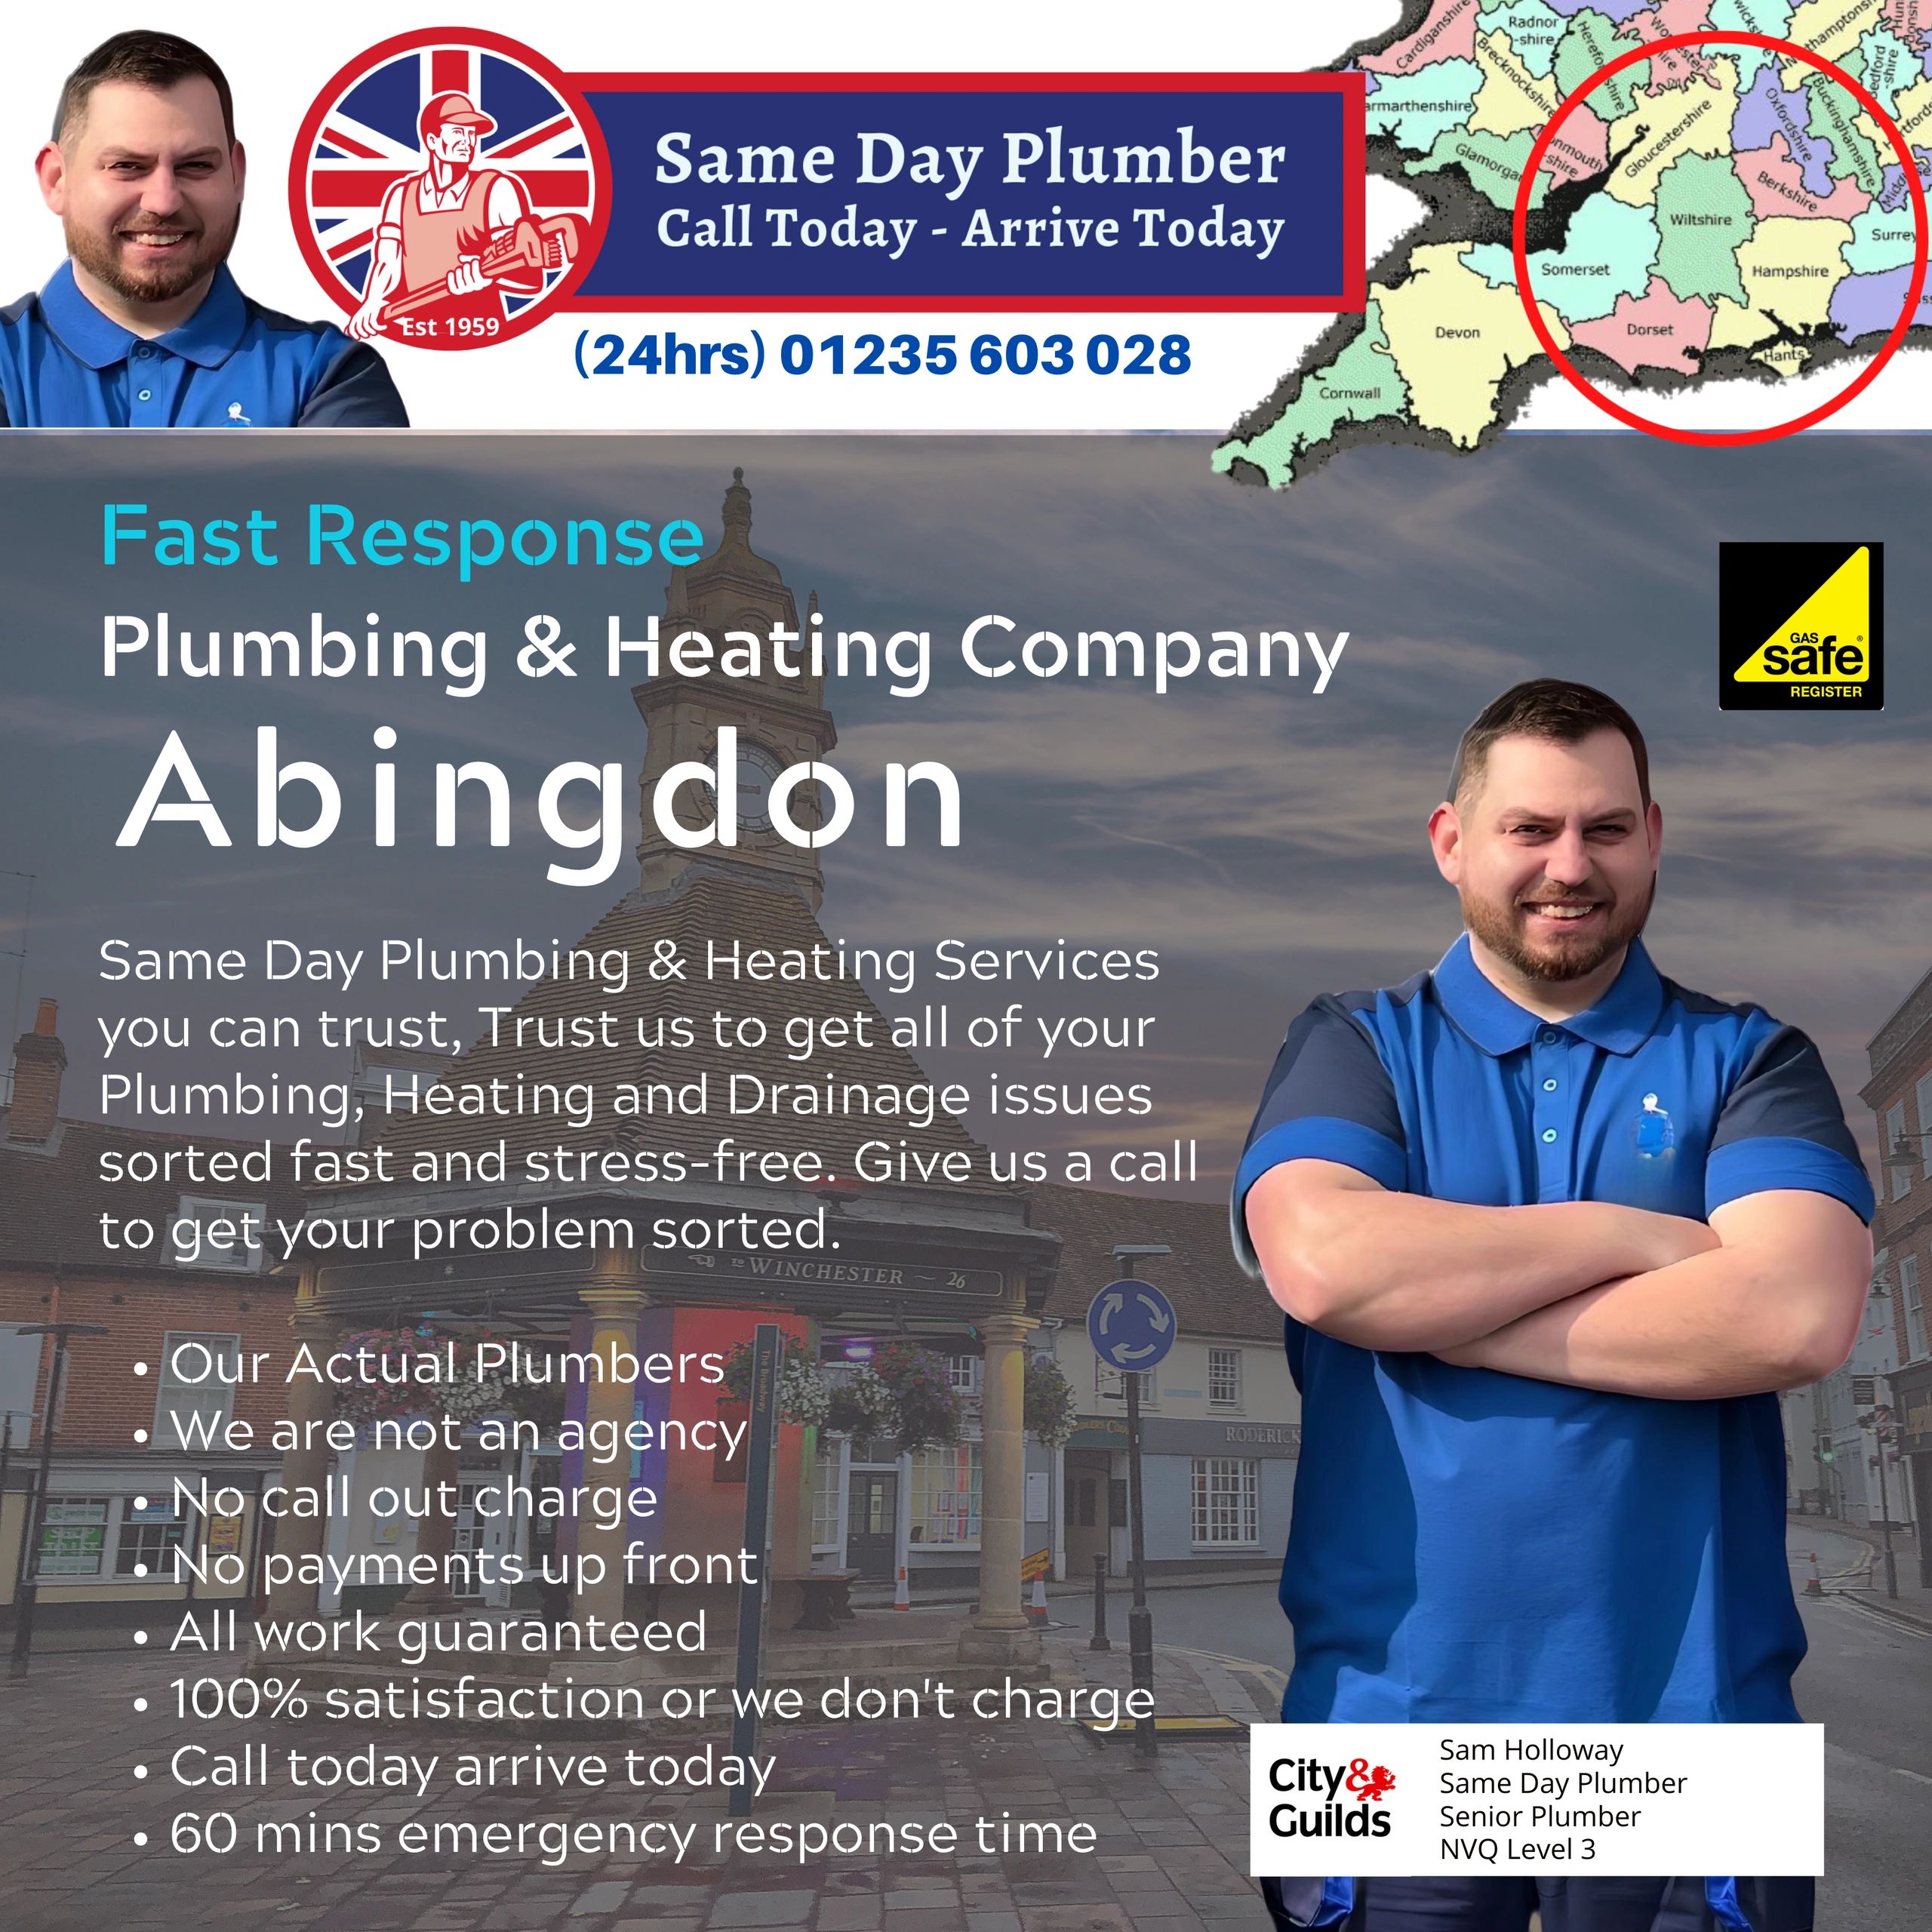 Same day plumber in Abingdon